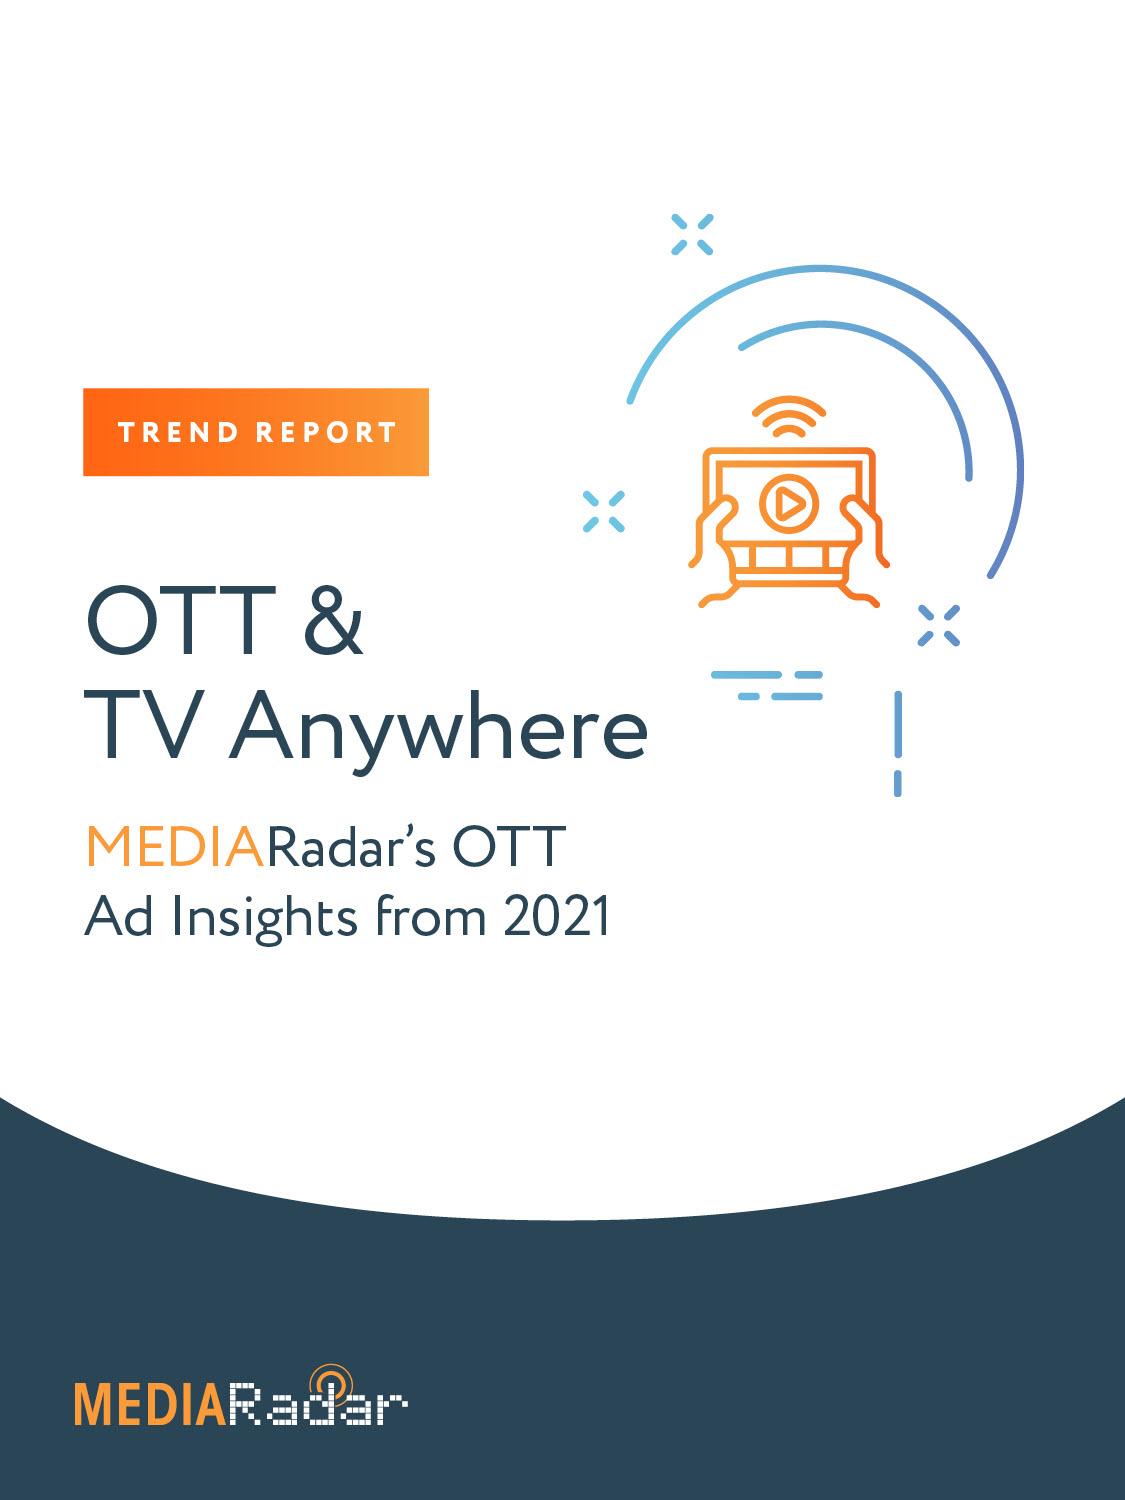 OTT & TV Anywhere: MediaRadar’s OTT Ad Insights from 2021